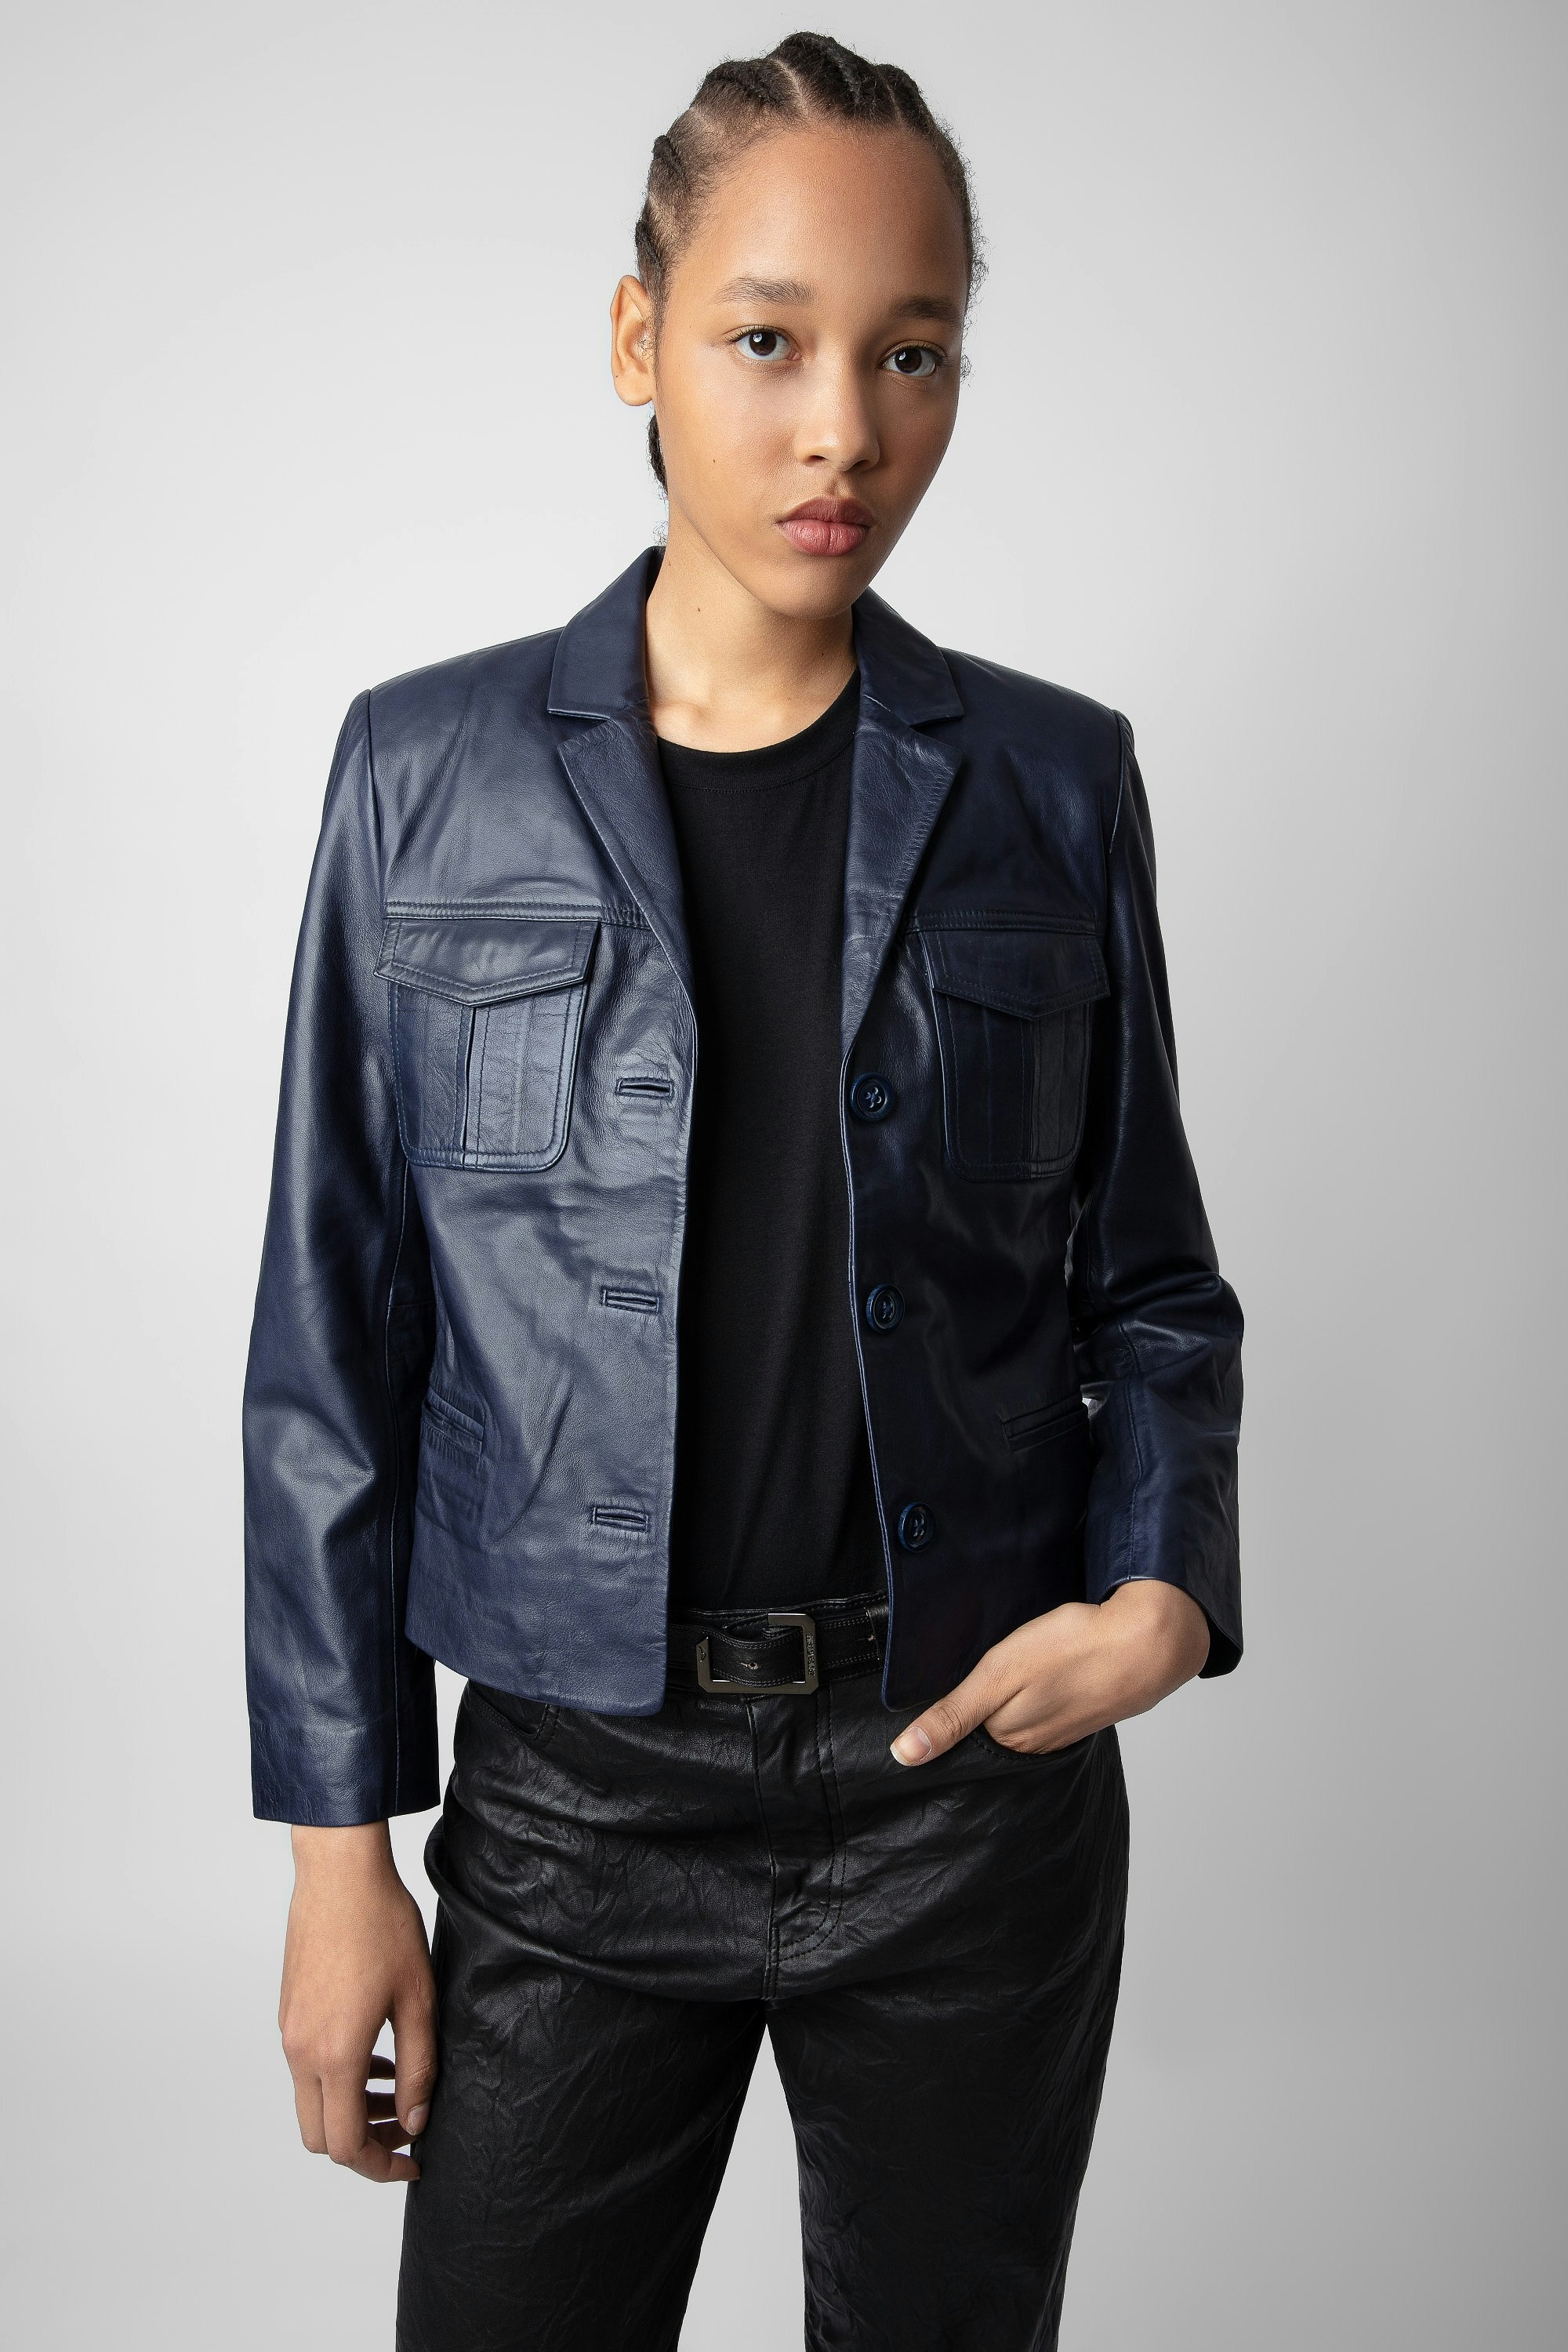 Liams Leather Jacket